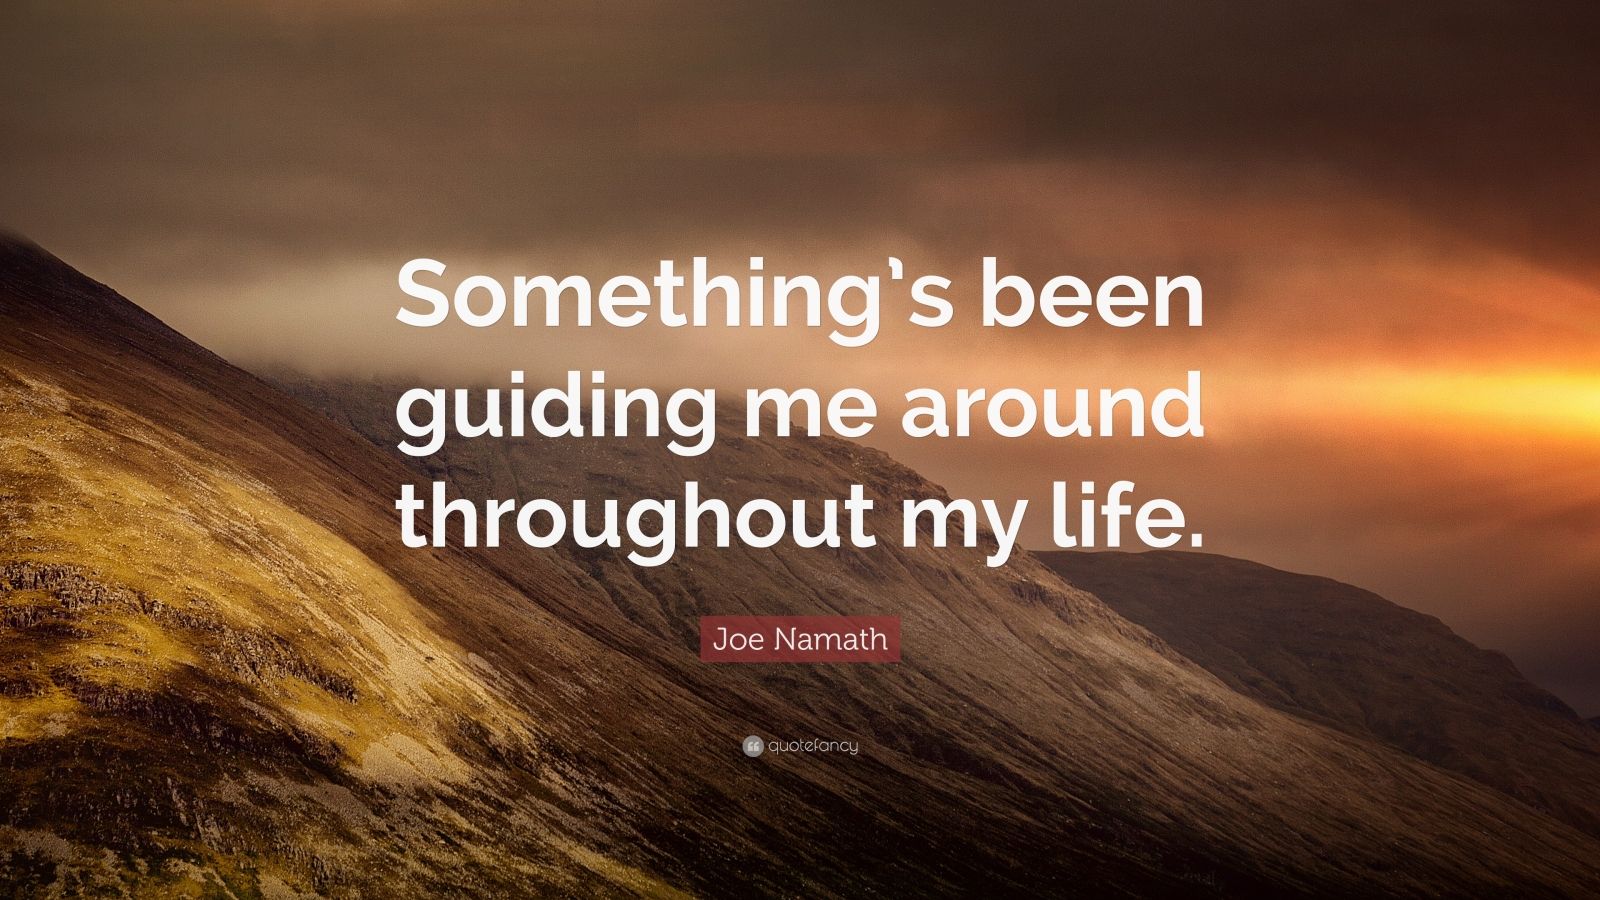 Joe Namath Quote: "Something's been guiding me around ...